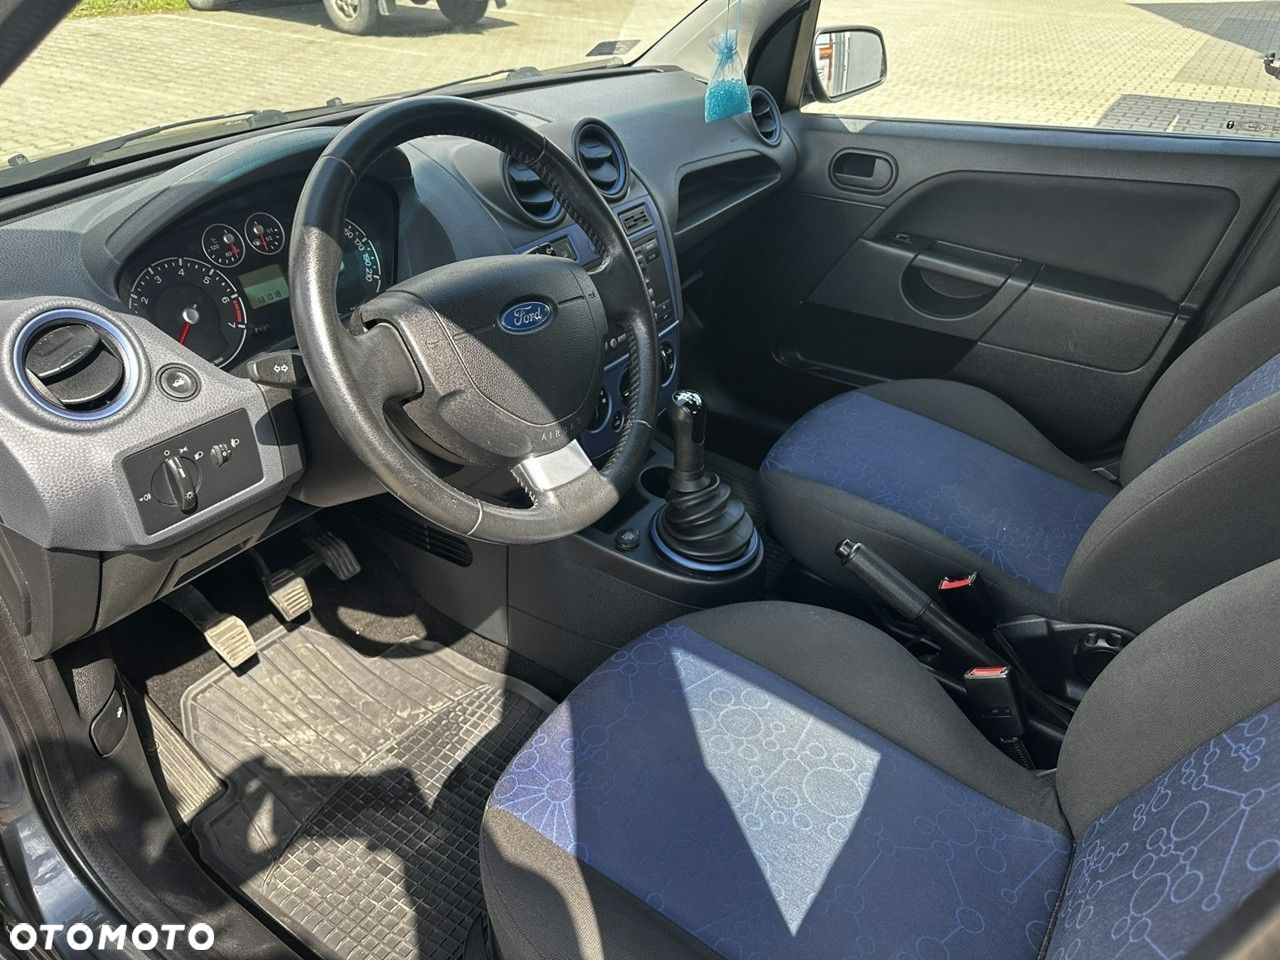 Ford Fiesta 1.3 Ambiente - 18